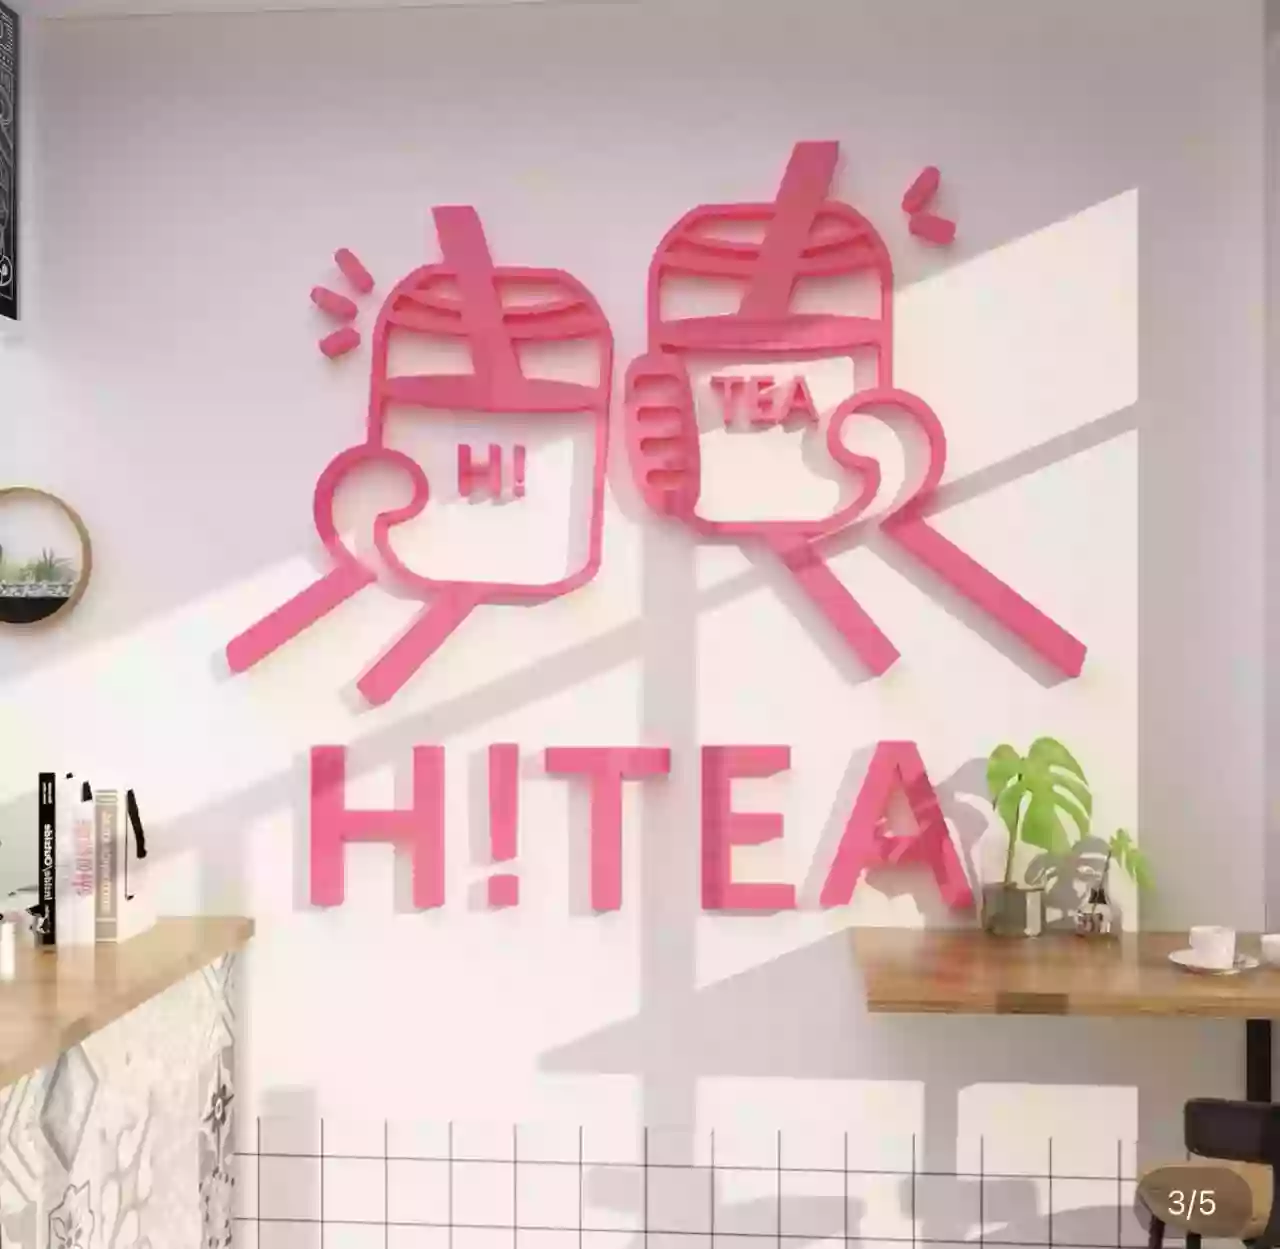 H! Tea